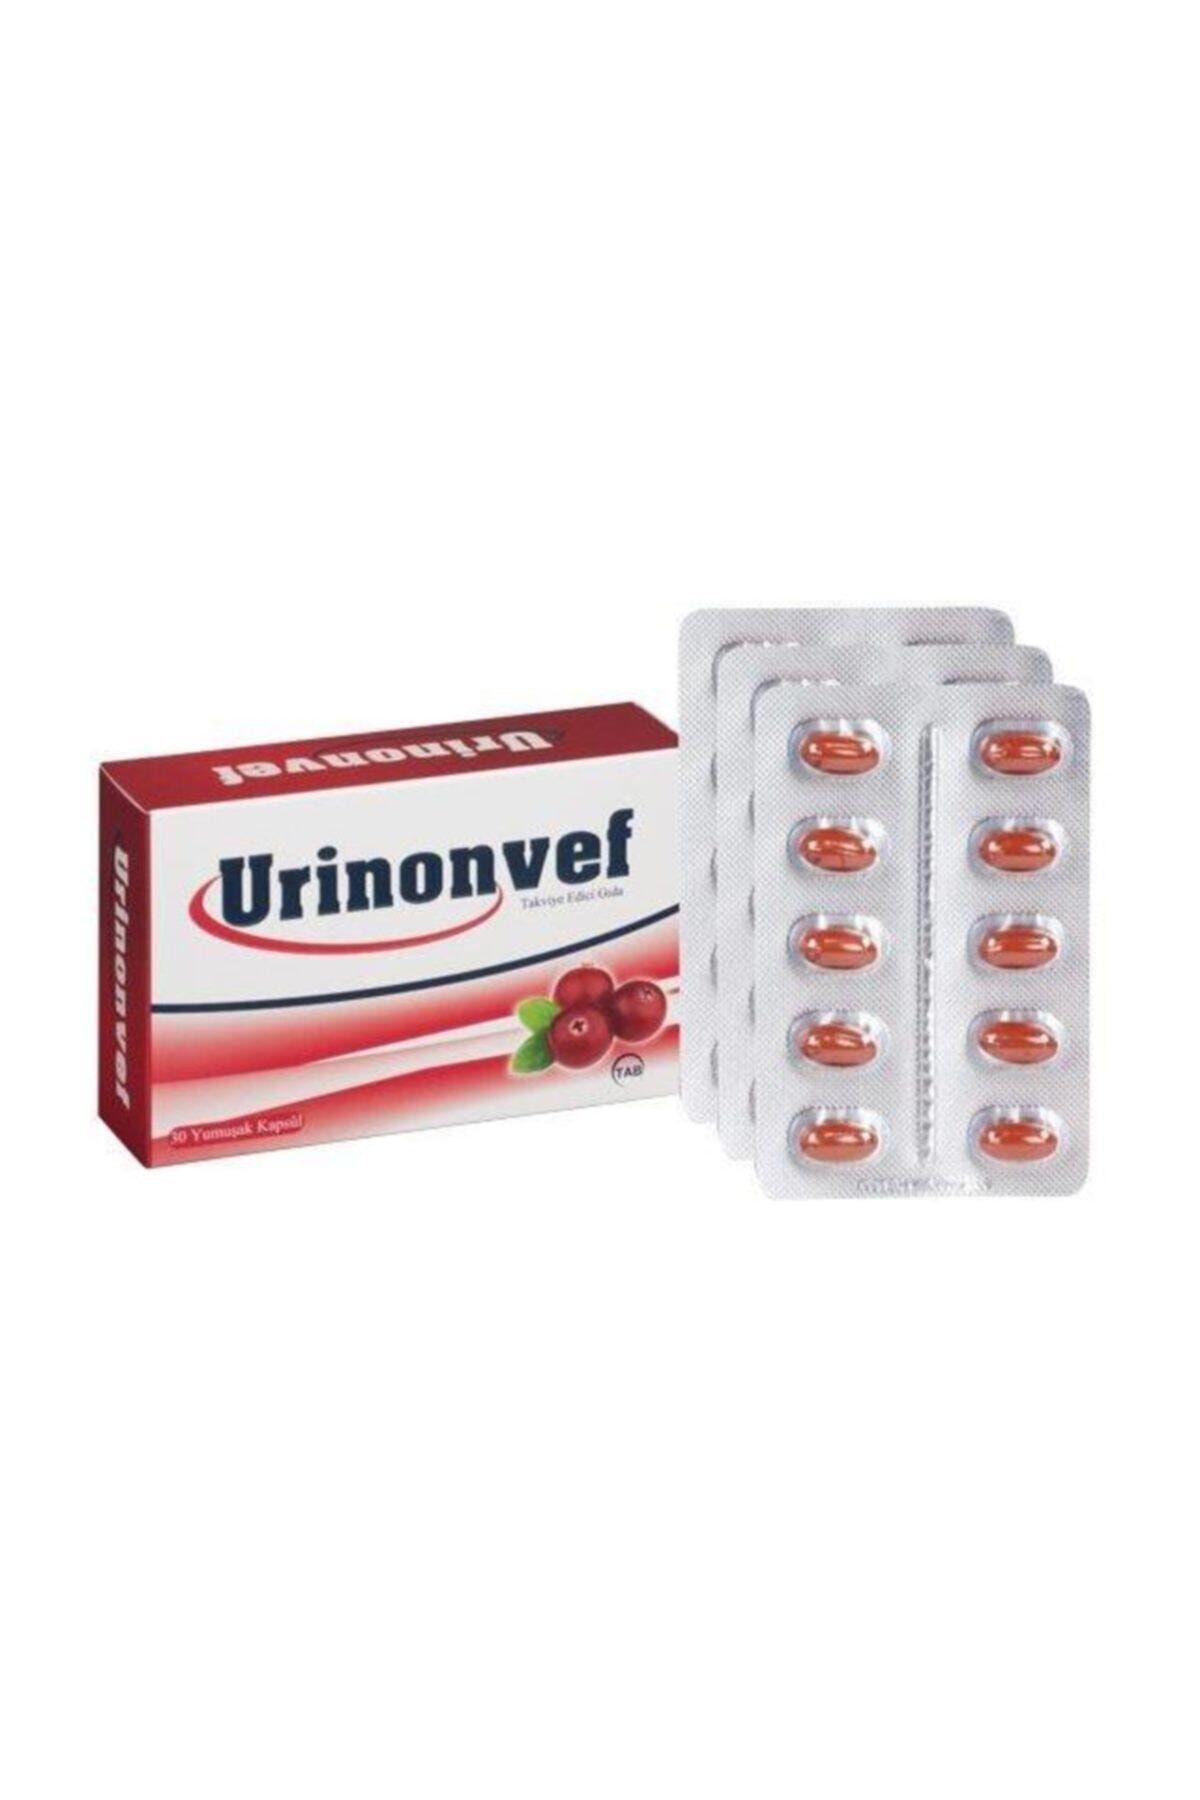 Urinonvef Cranberry Takviye Edici Gida 30 Yumusak Kapsul Fiyati Yorumlari Trendyol